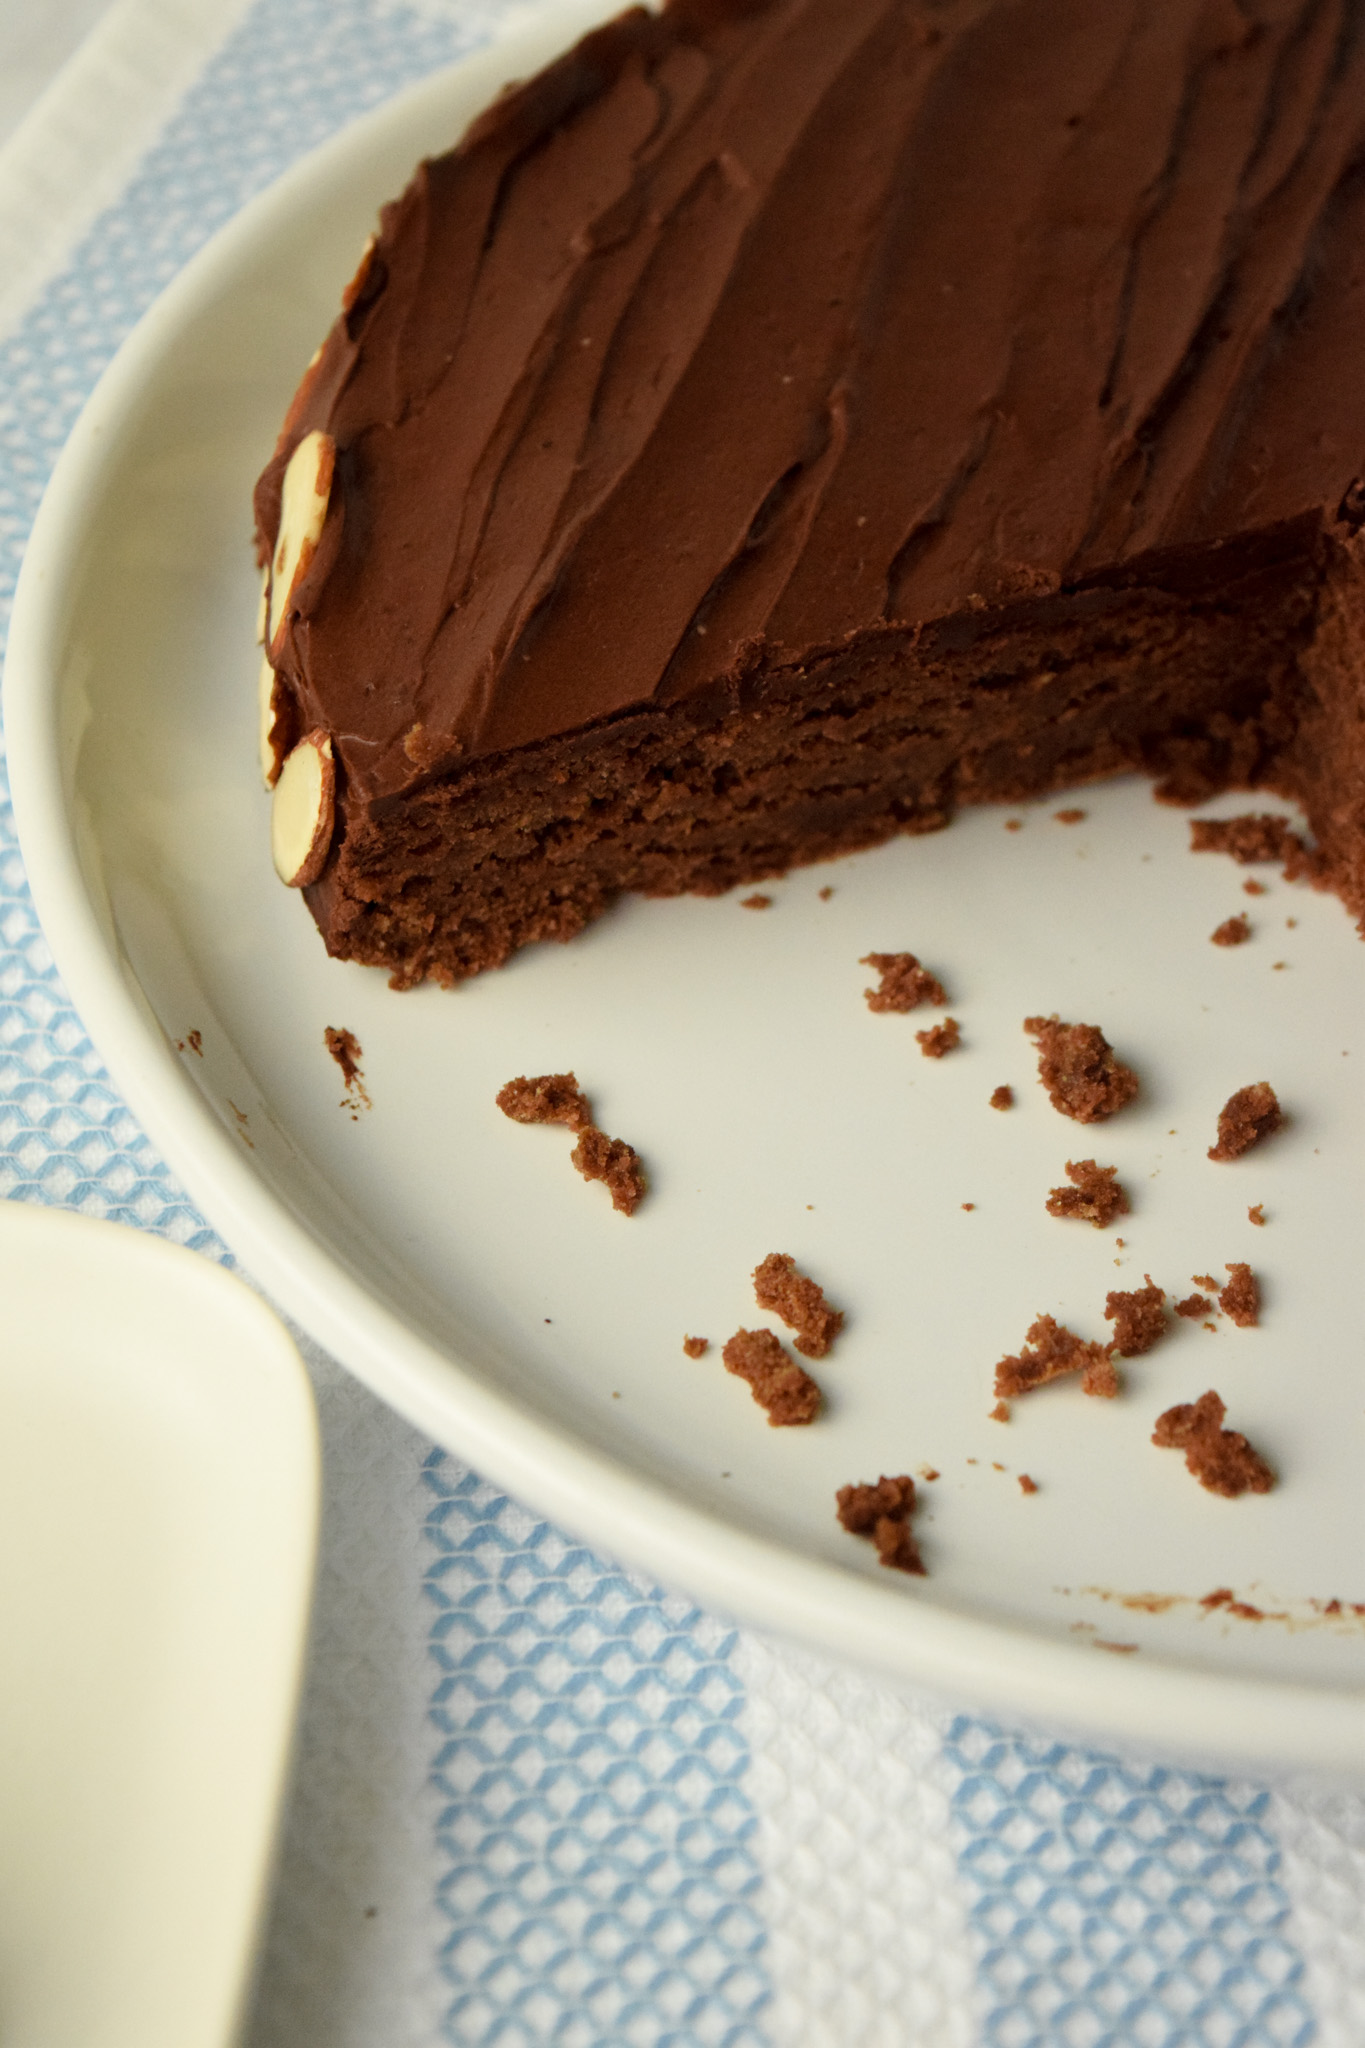 Julia Child's gluten free chocolate almond cake